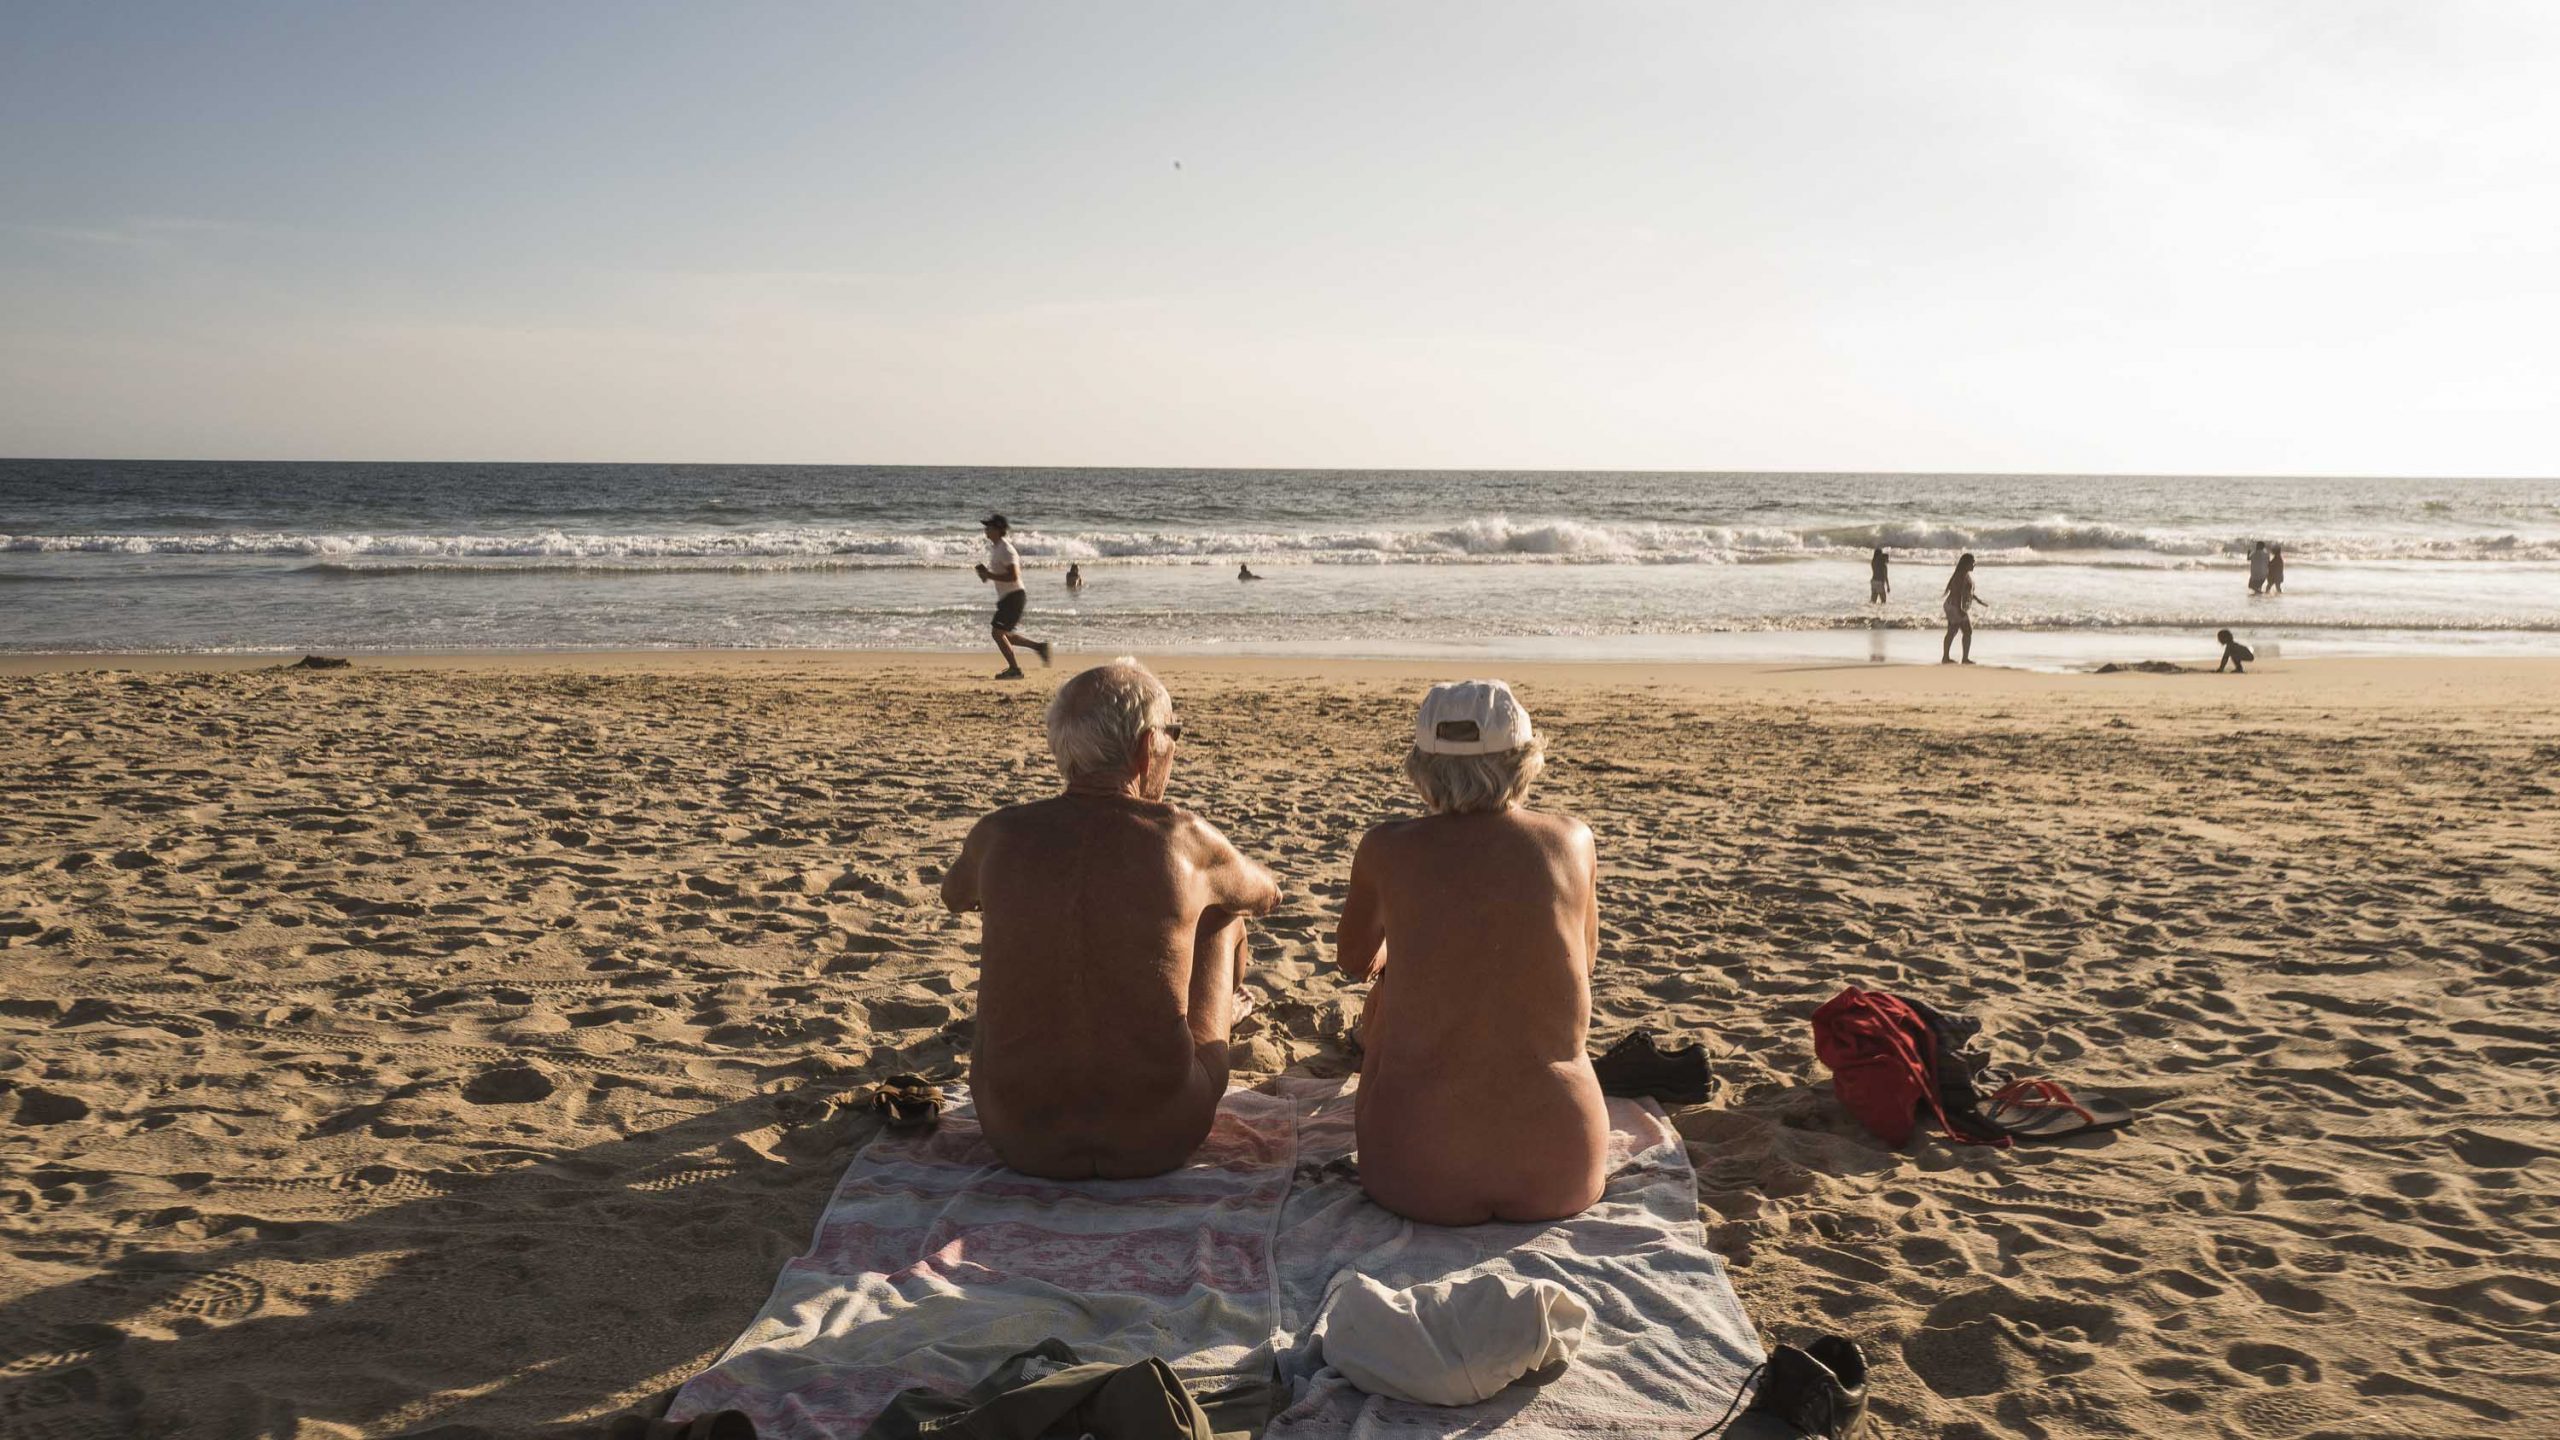 Nude people on nude beaches